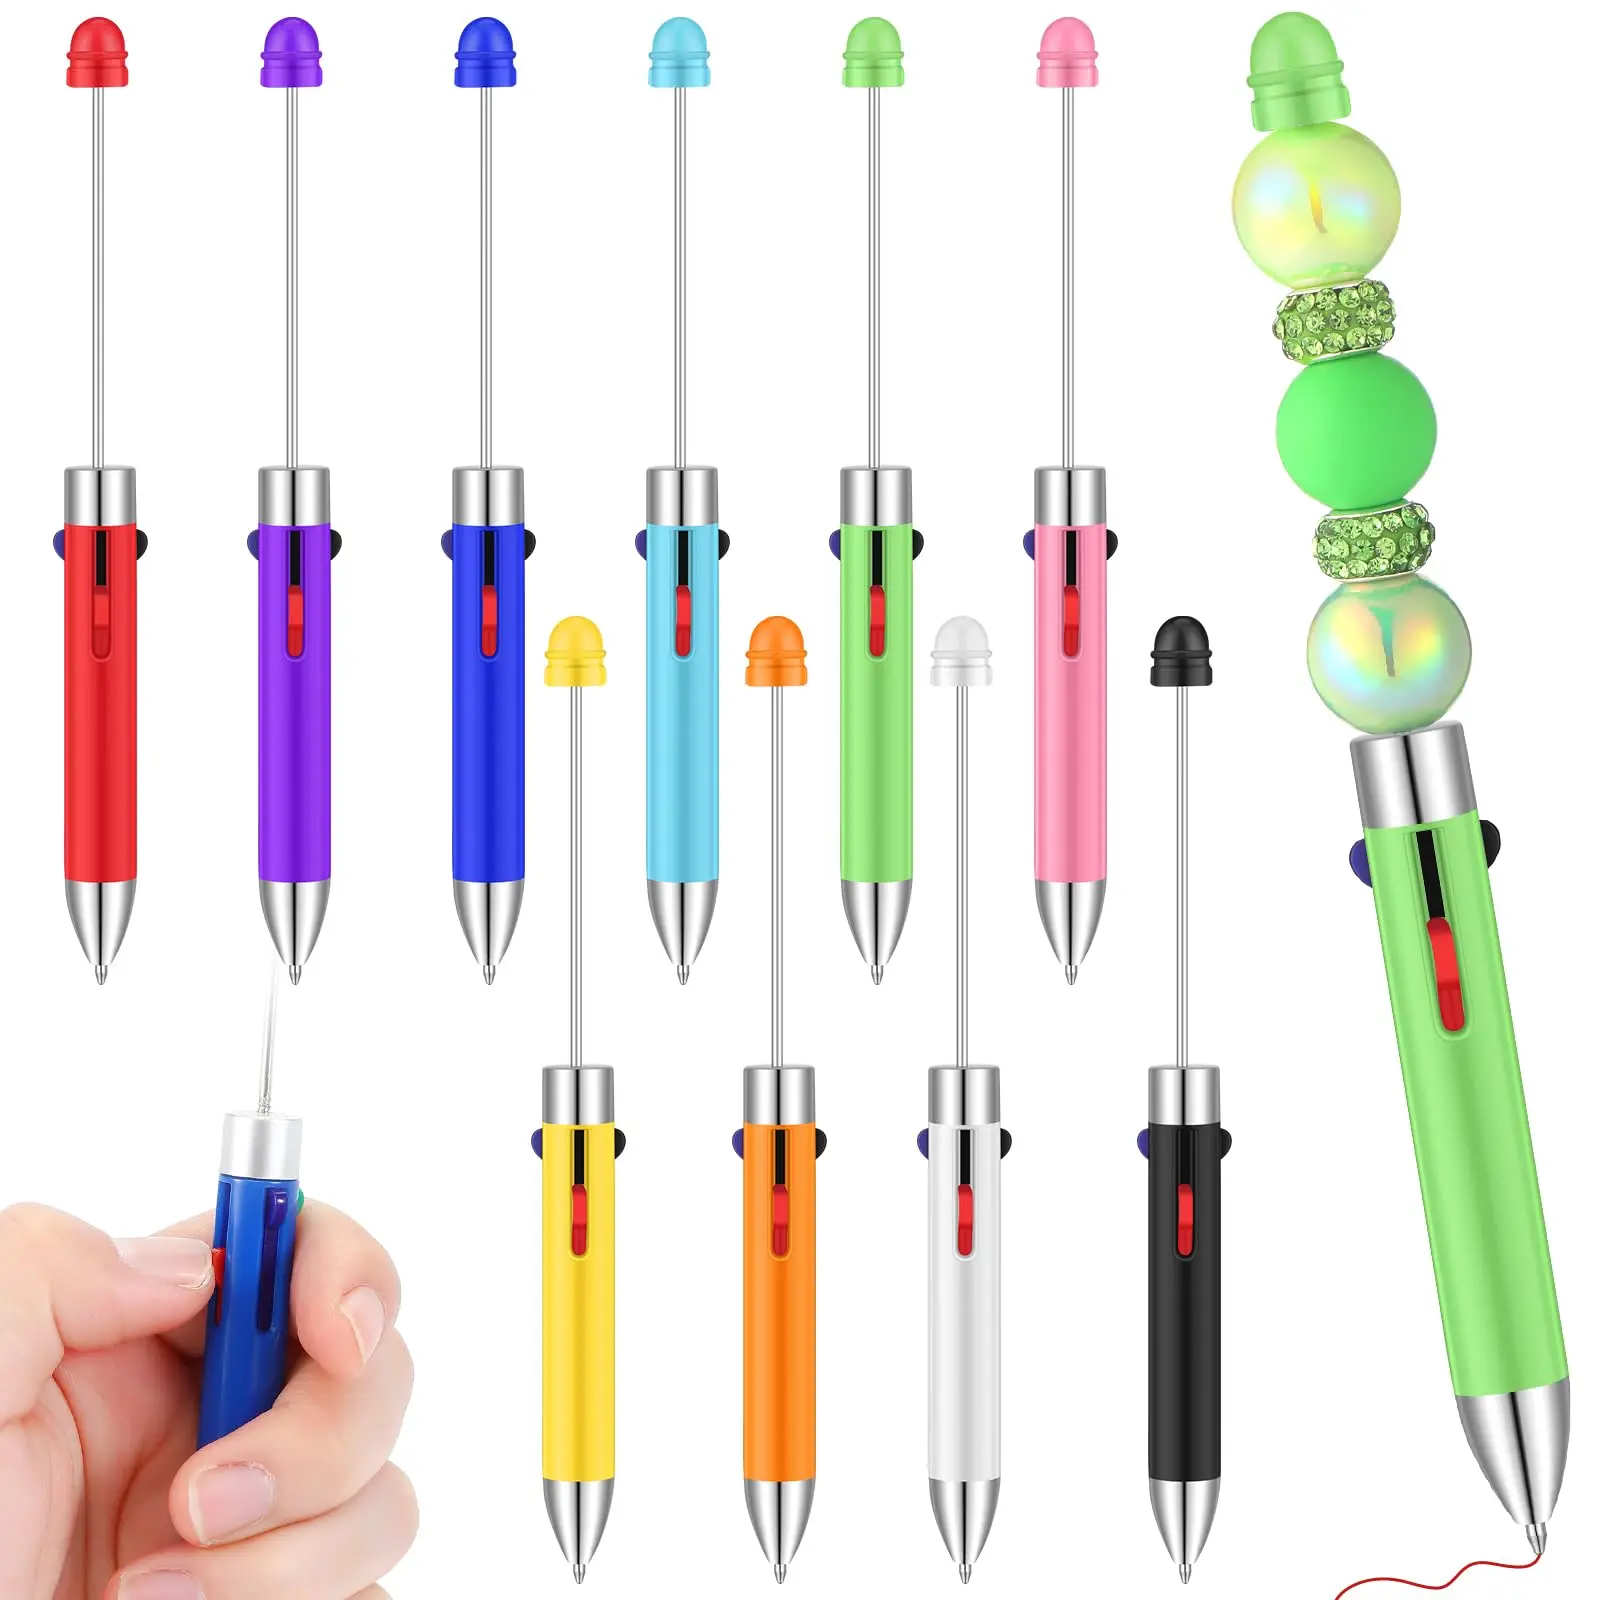 

10pcs New 4-color Refill Beaded Ballpoint Pen DIY Beadable Pens Student Stationery Plastic Gift Pen School Office Pen Supplies